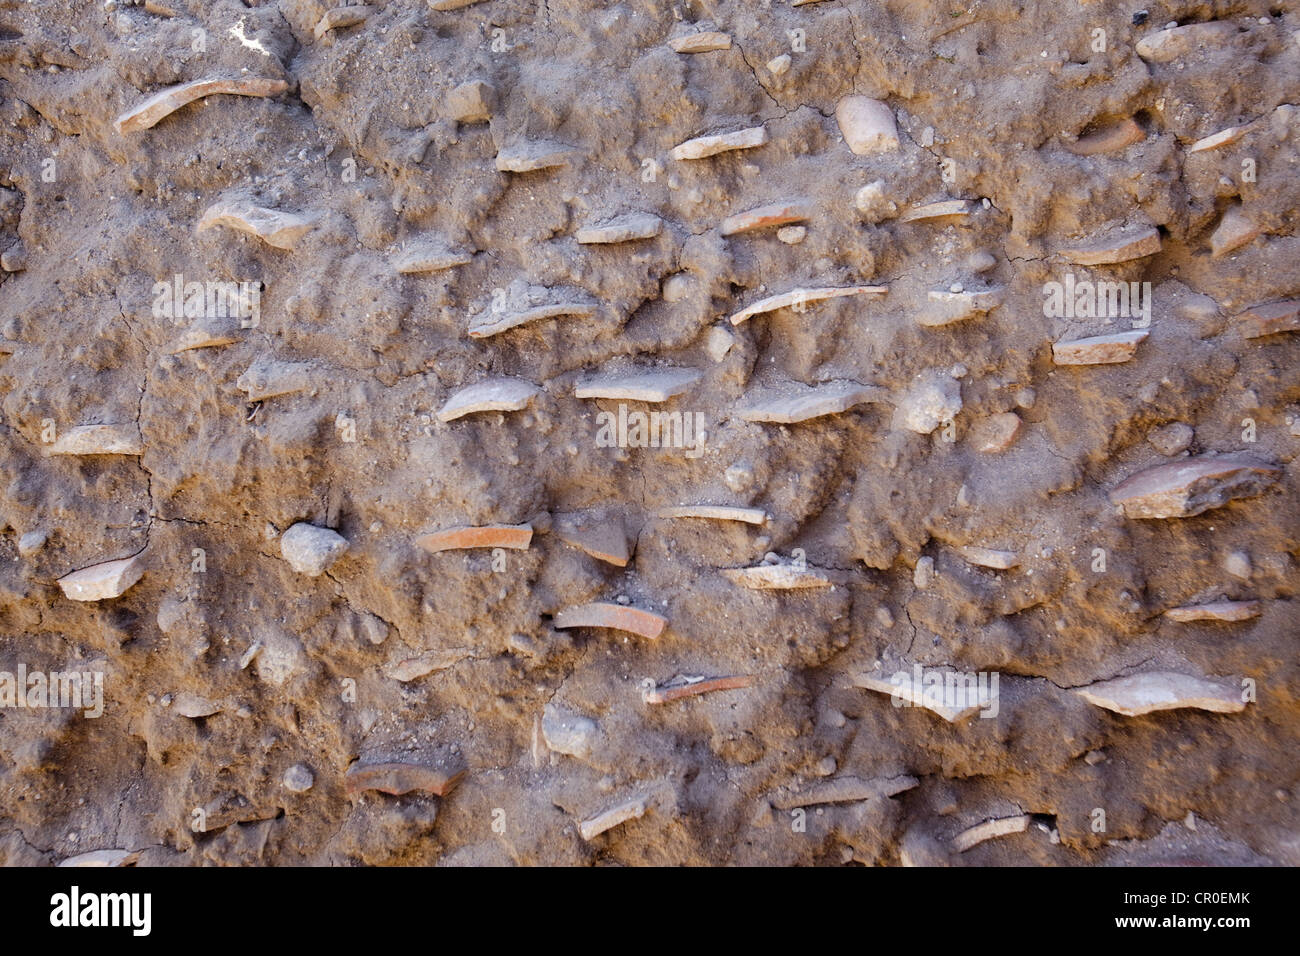 Archaeological excavation exposing potsherds at Caesarea Maritima, Israel Stock Photo